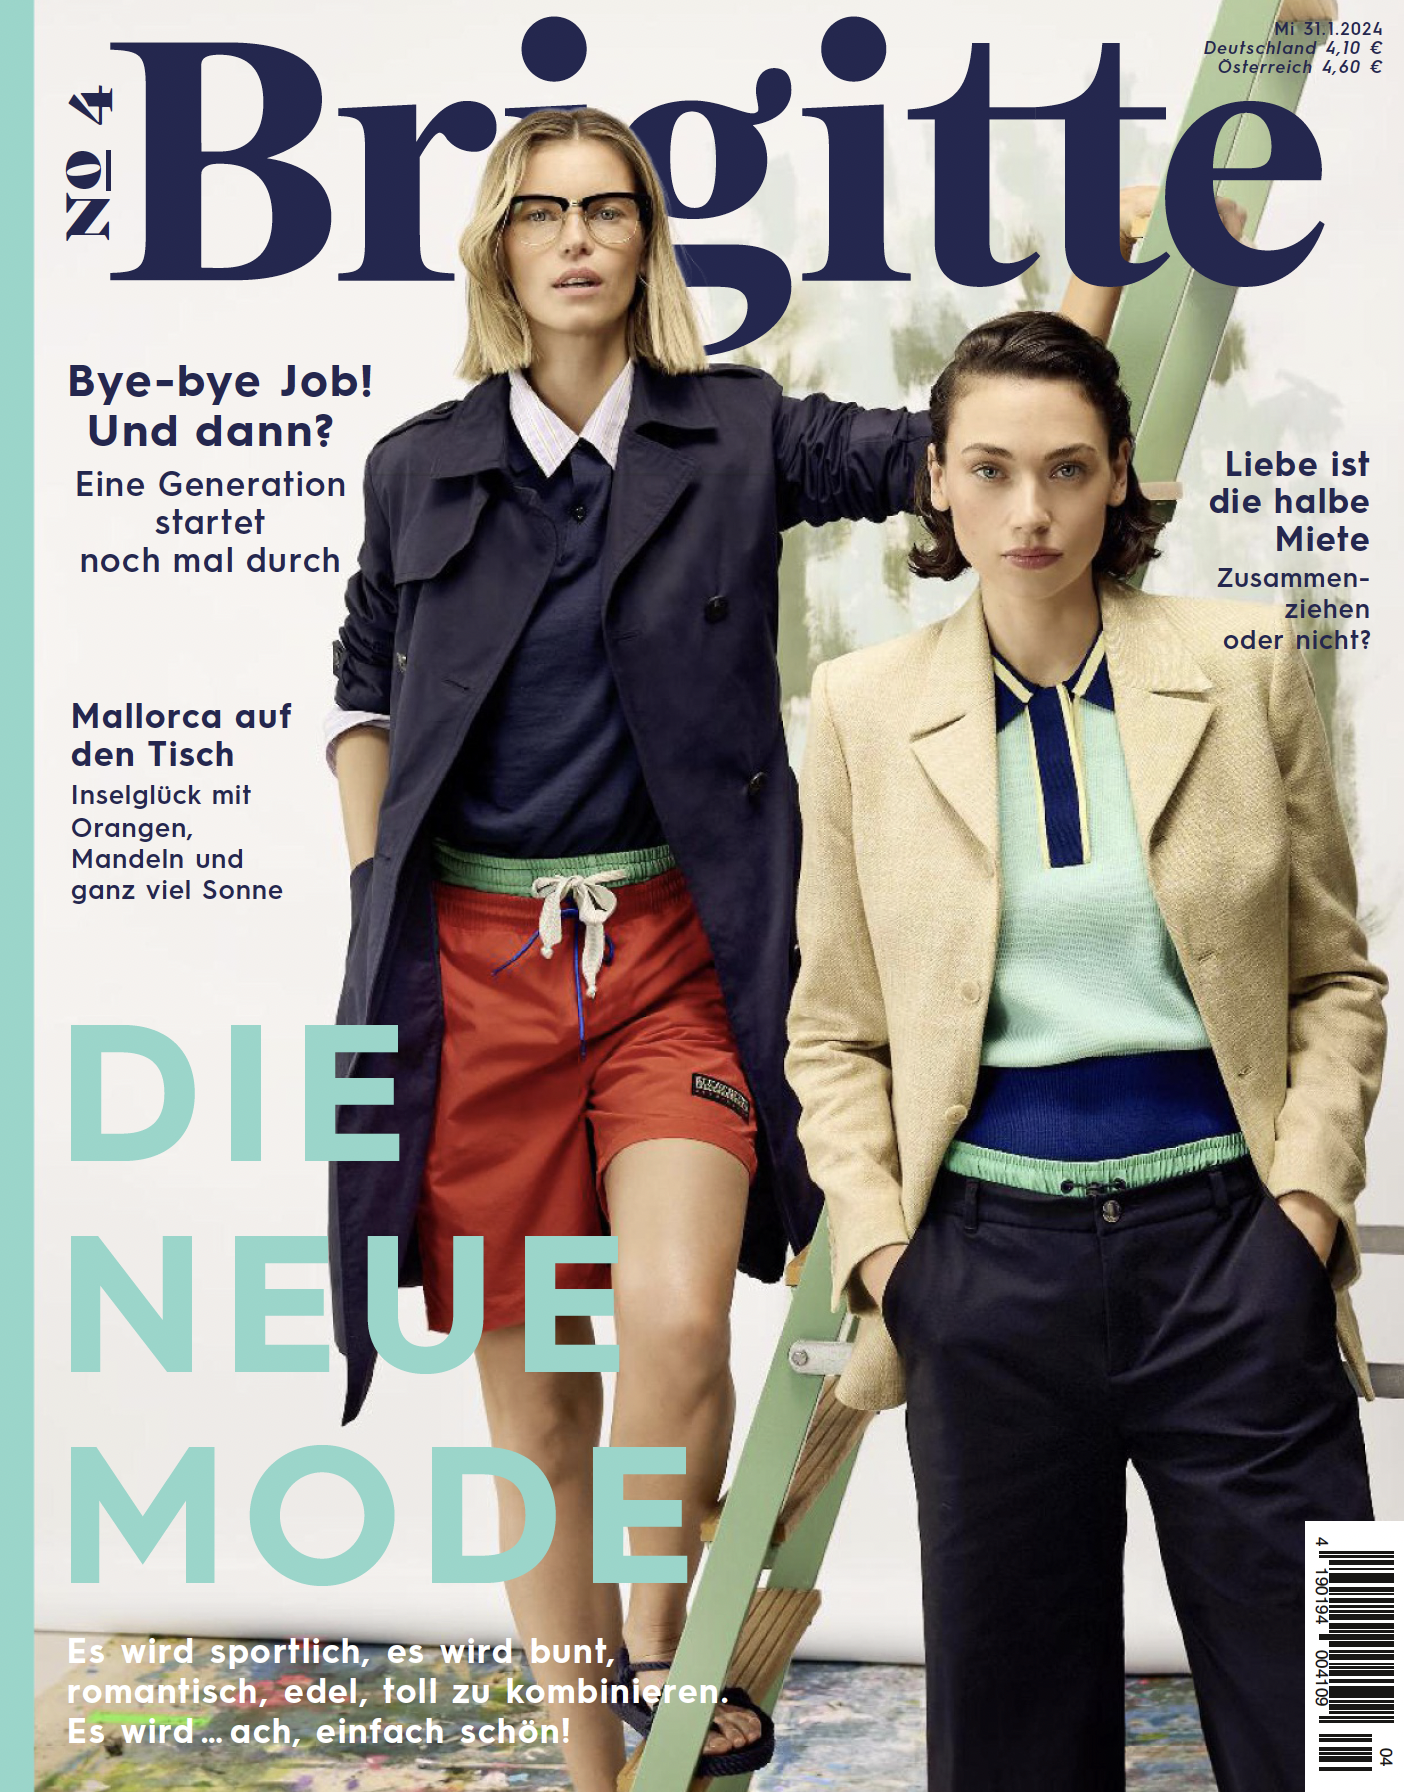 Preview image for Cover-Star des Brigitte-Magazins